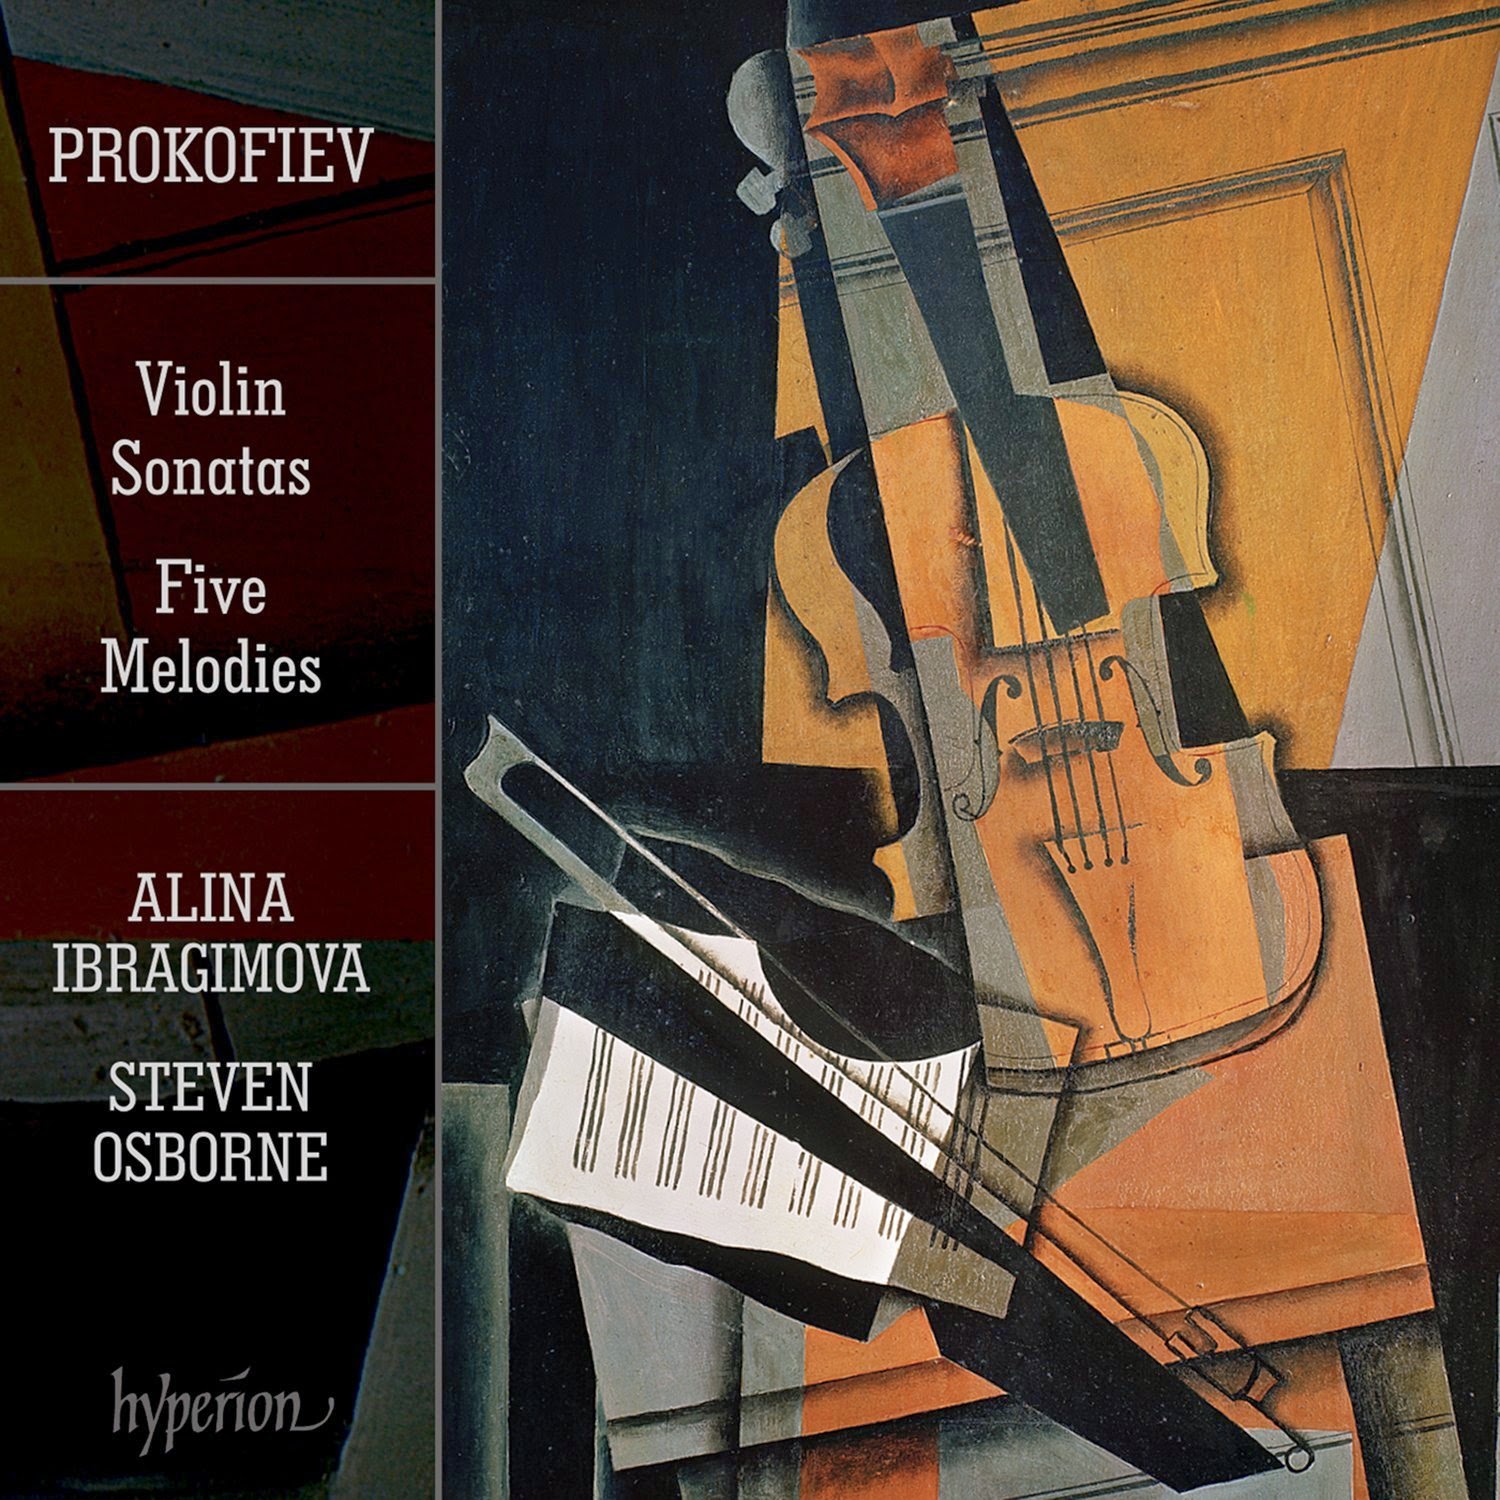 Prokofiev Violin Sonatas - Alina Ibragimova, Steven Osborne - Hyperion CD67514